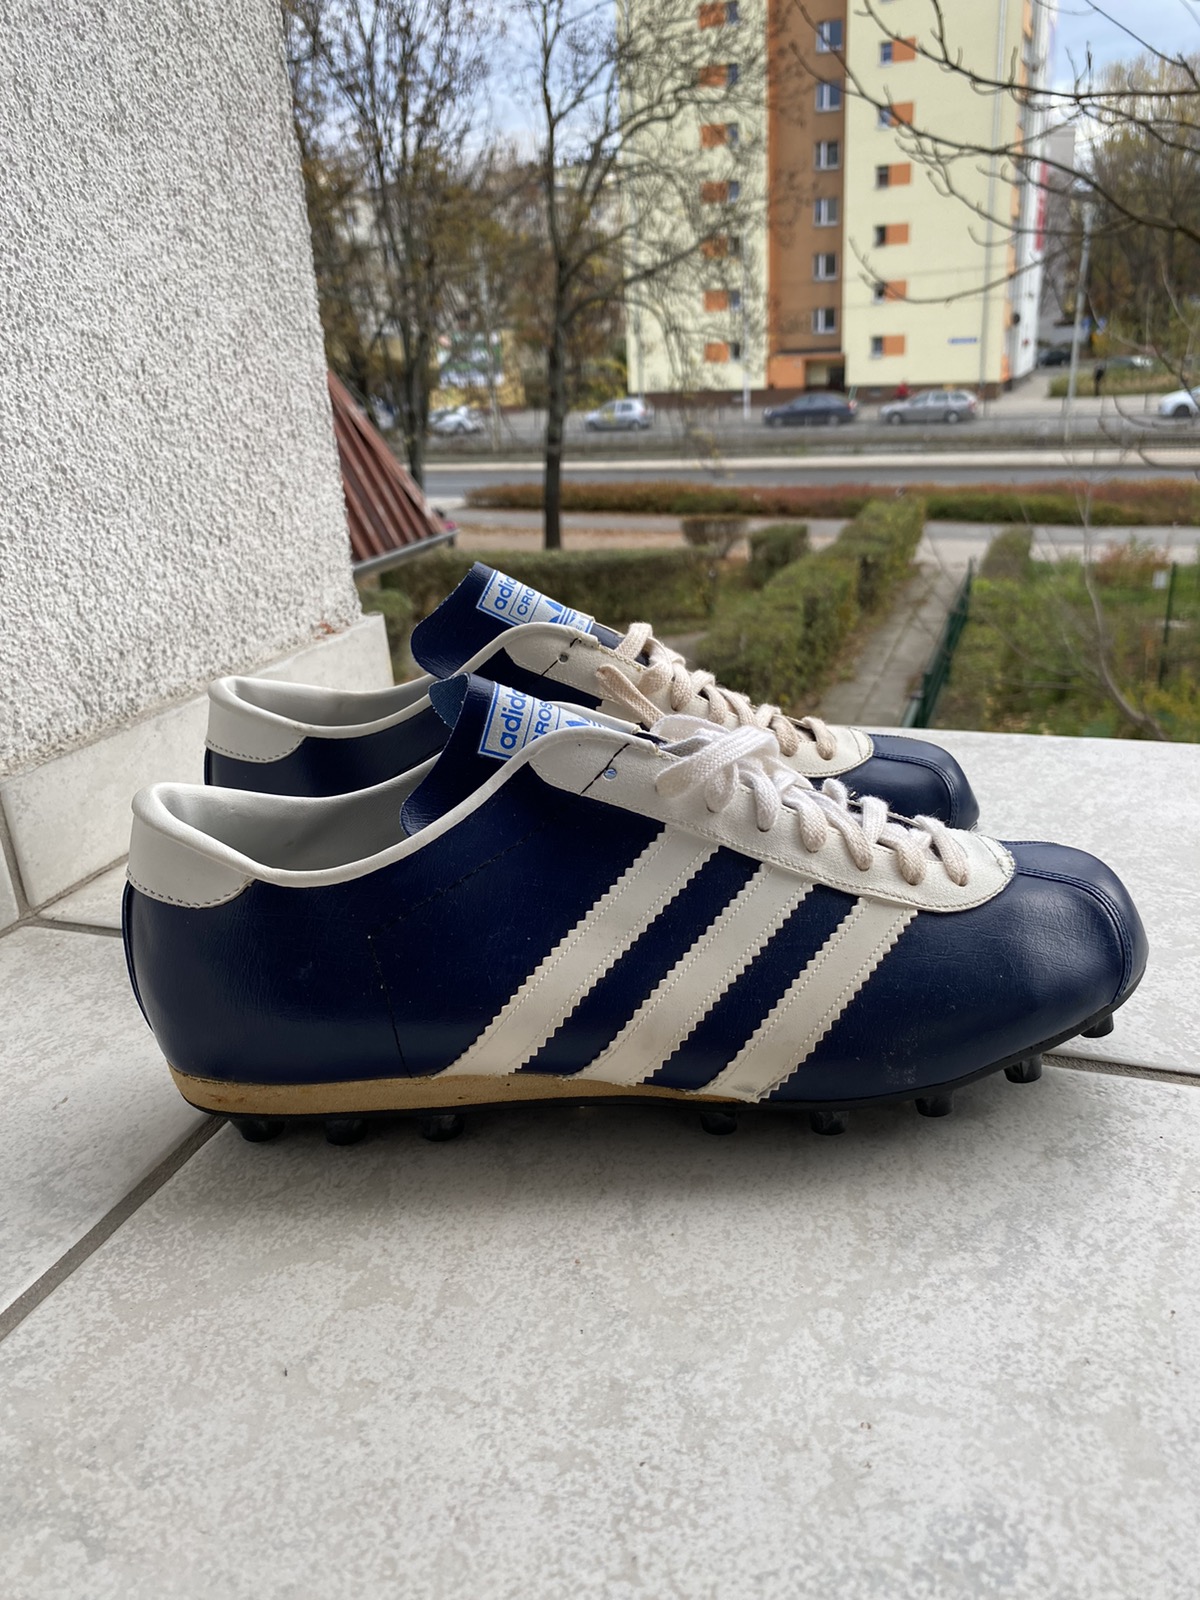 Adidas Cross football boots very rare 1970-80s - 1